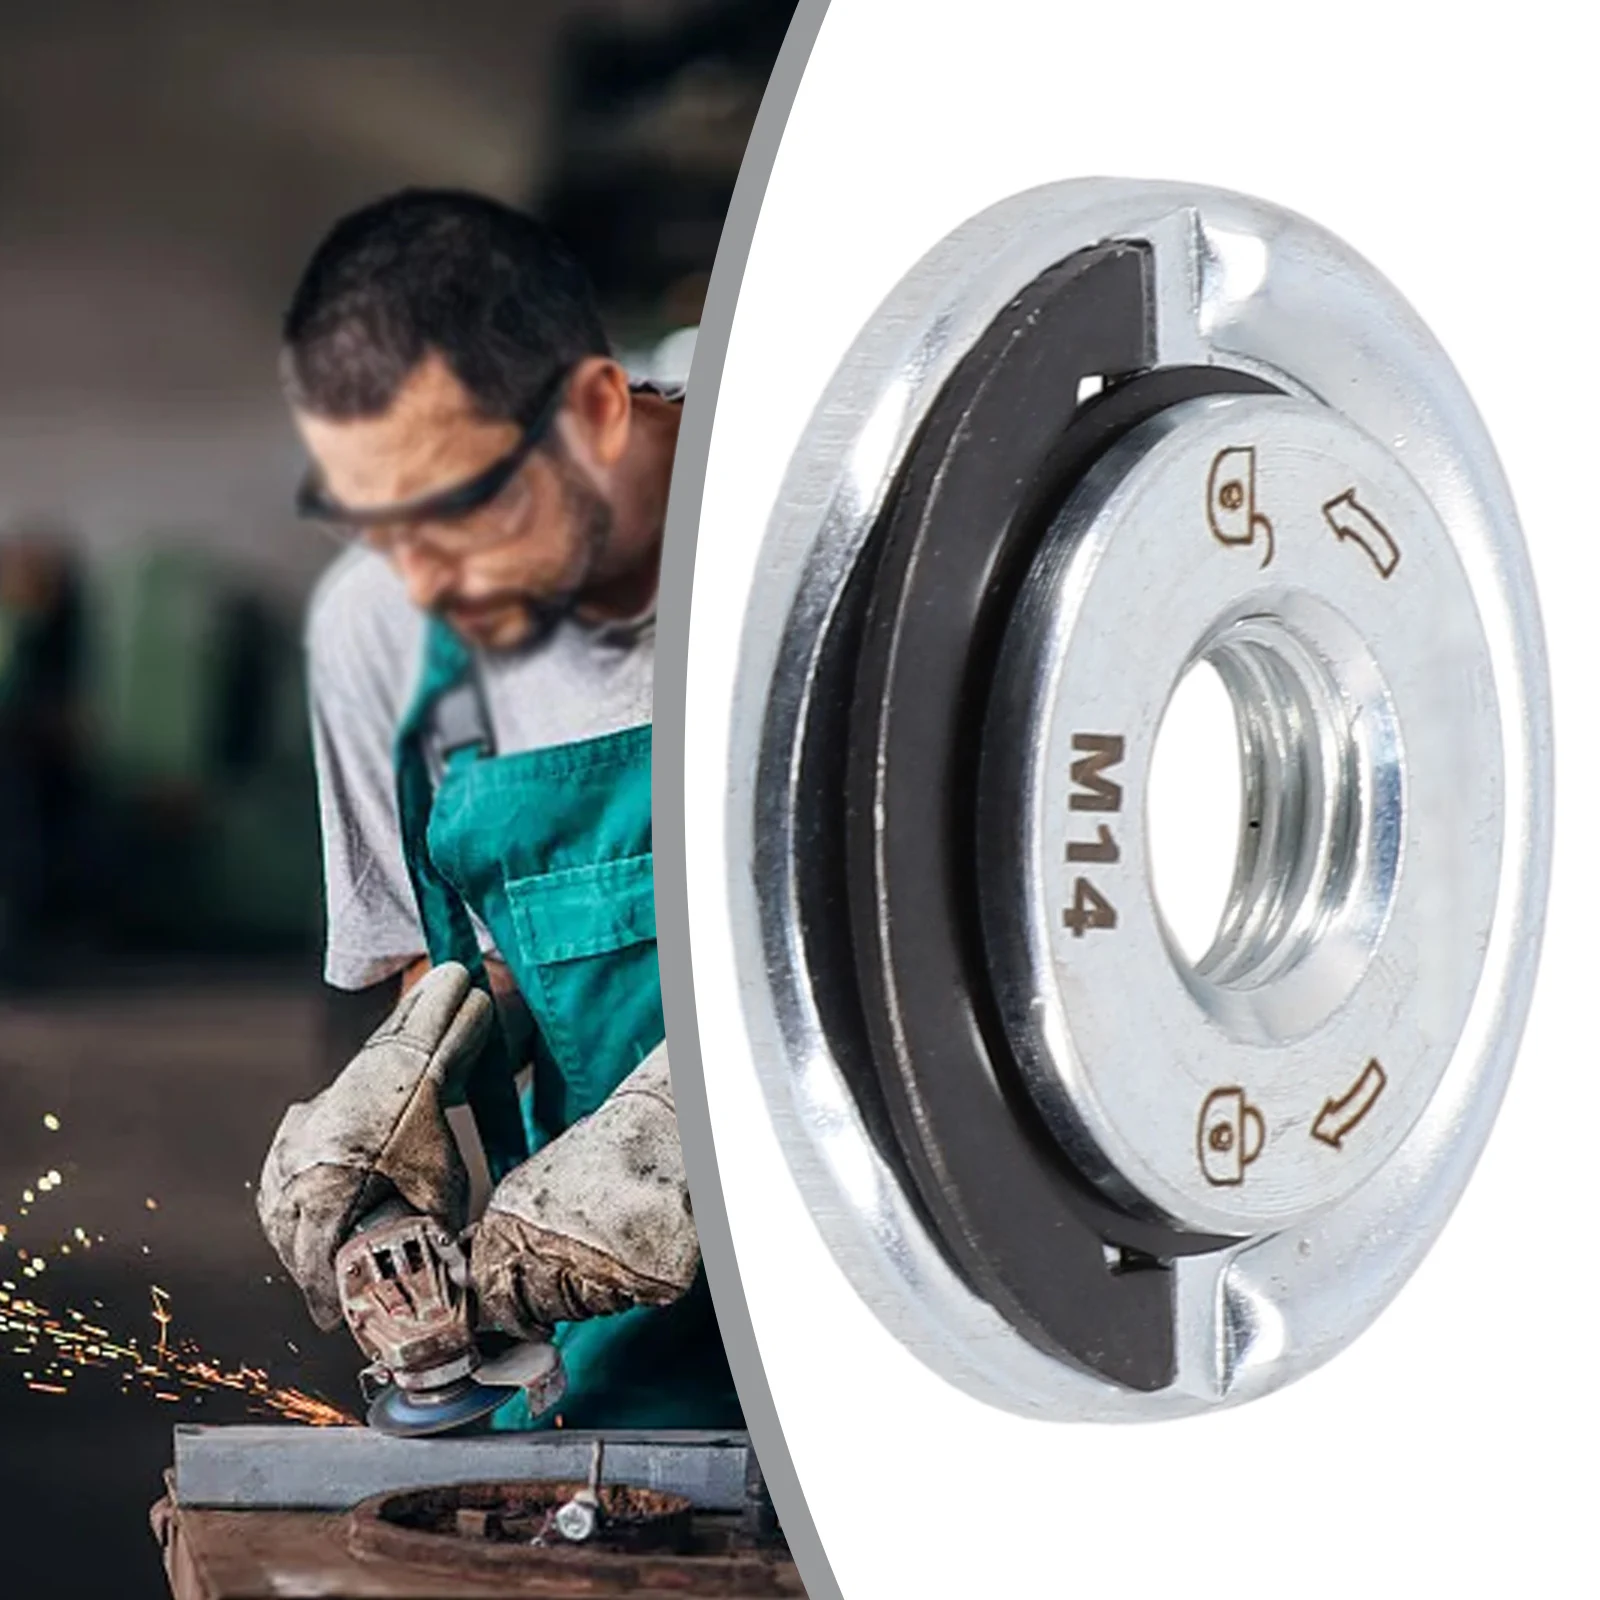 M14 SelfLocking Grinder Pressing Plate Flange Nut Improve Grinding Efficiency, Innovative Design, Easy to Install